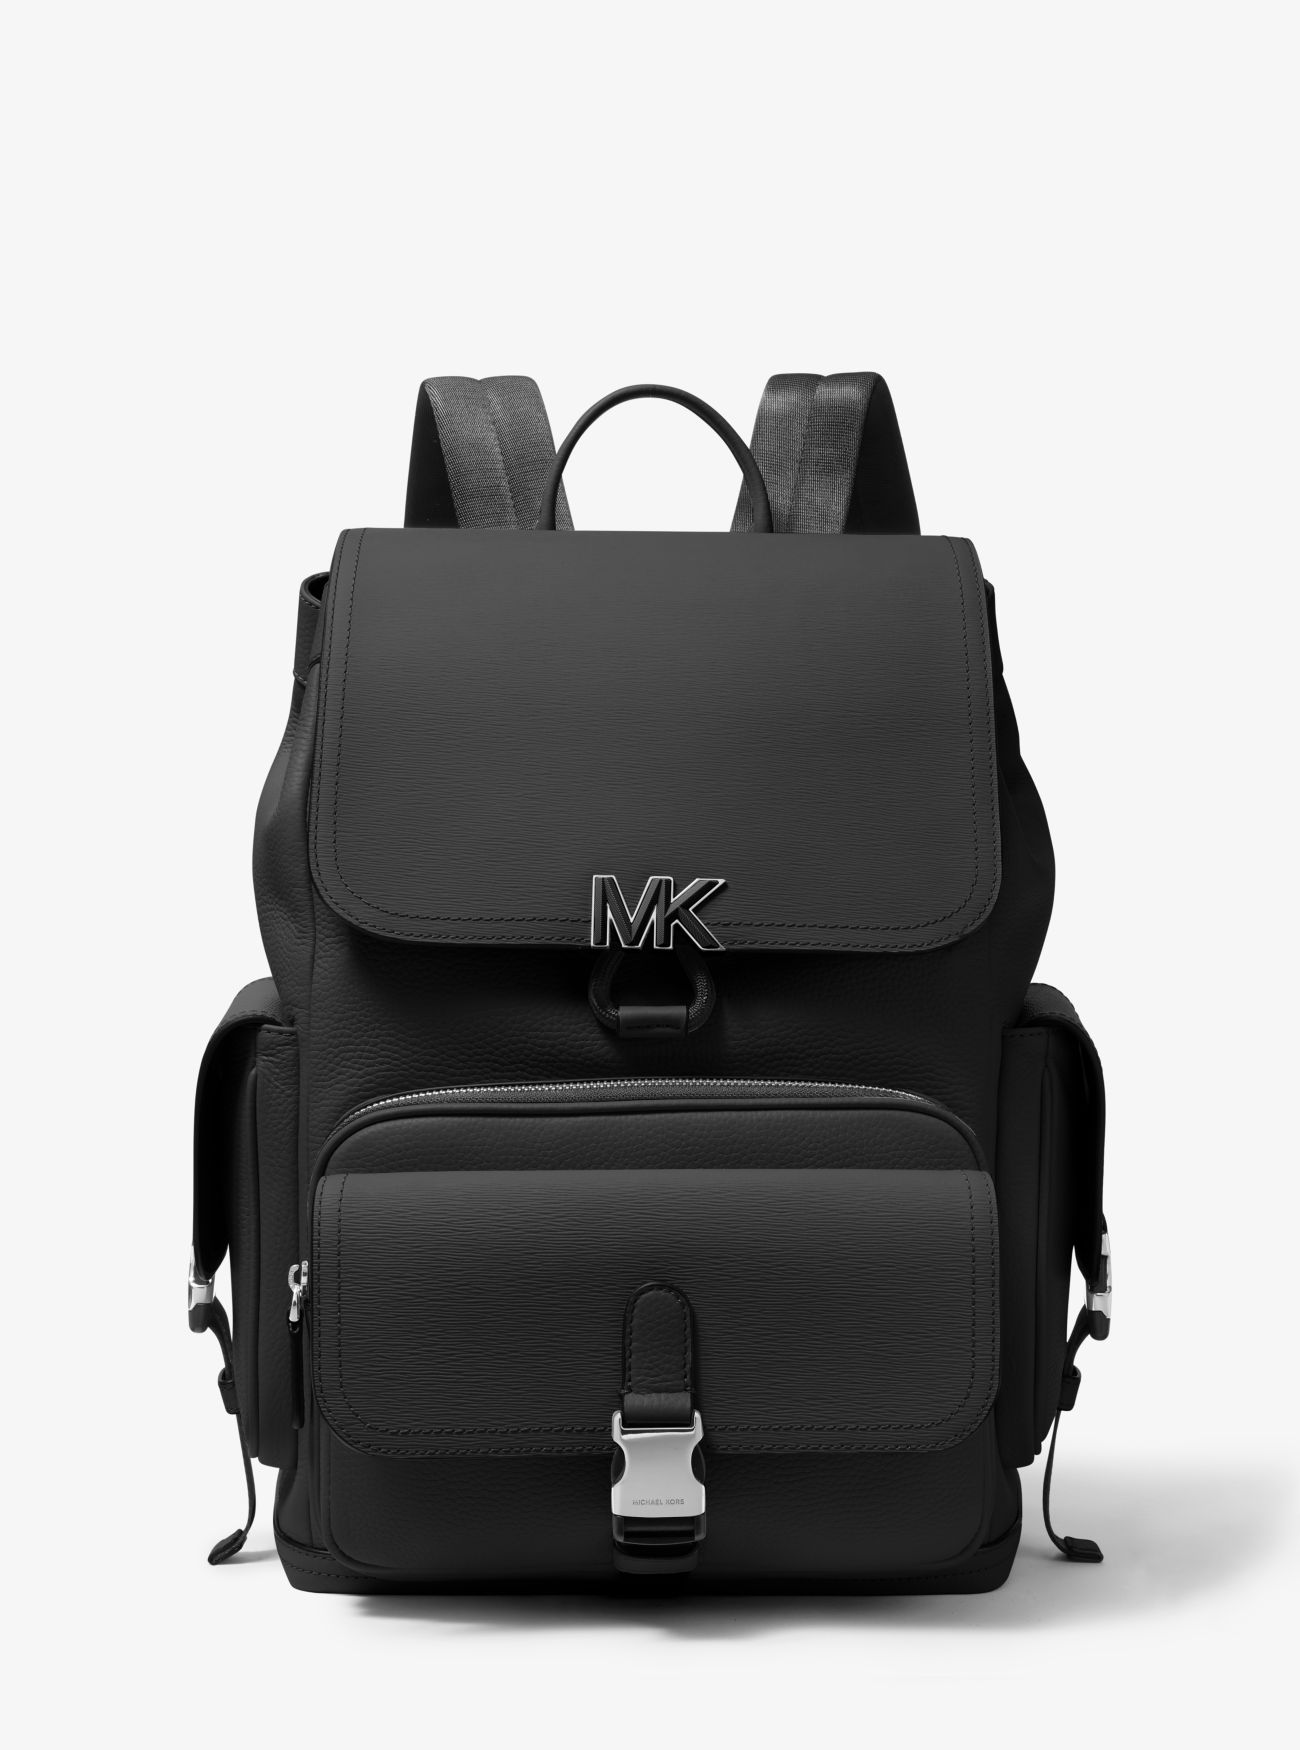 MK Hudson Leather Backpack - Black - Michael Kors